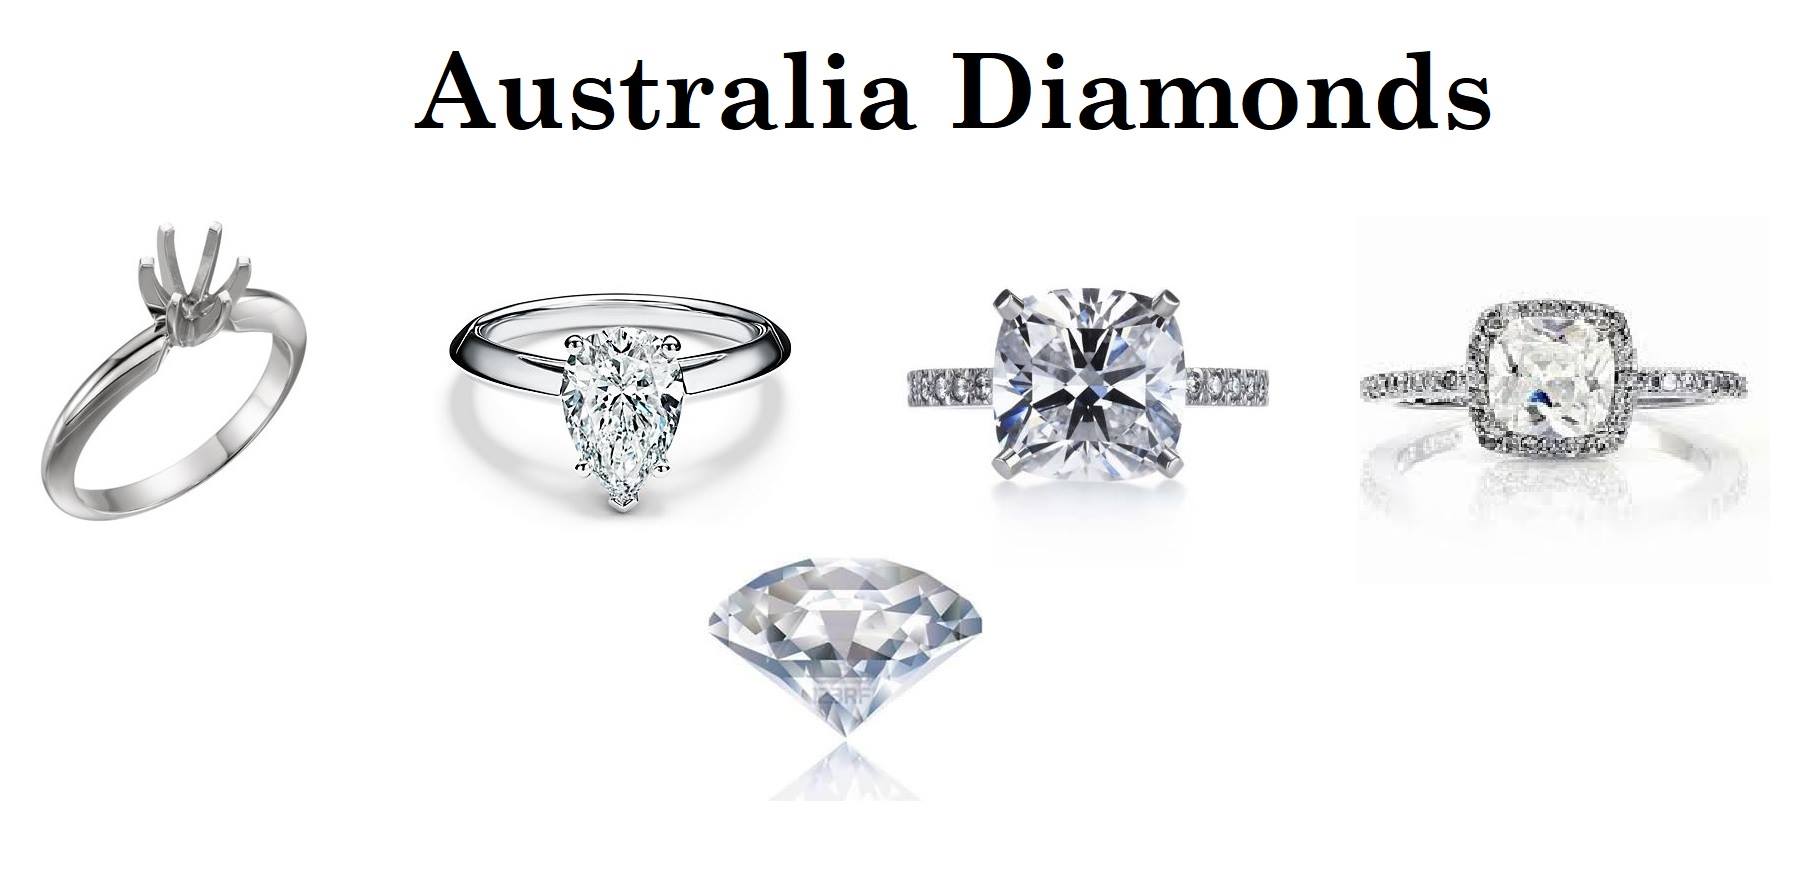 Australia Diamonds